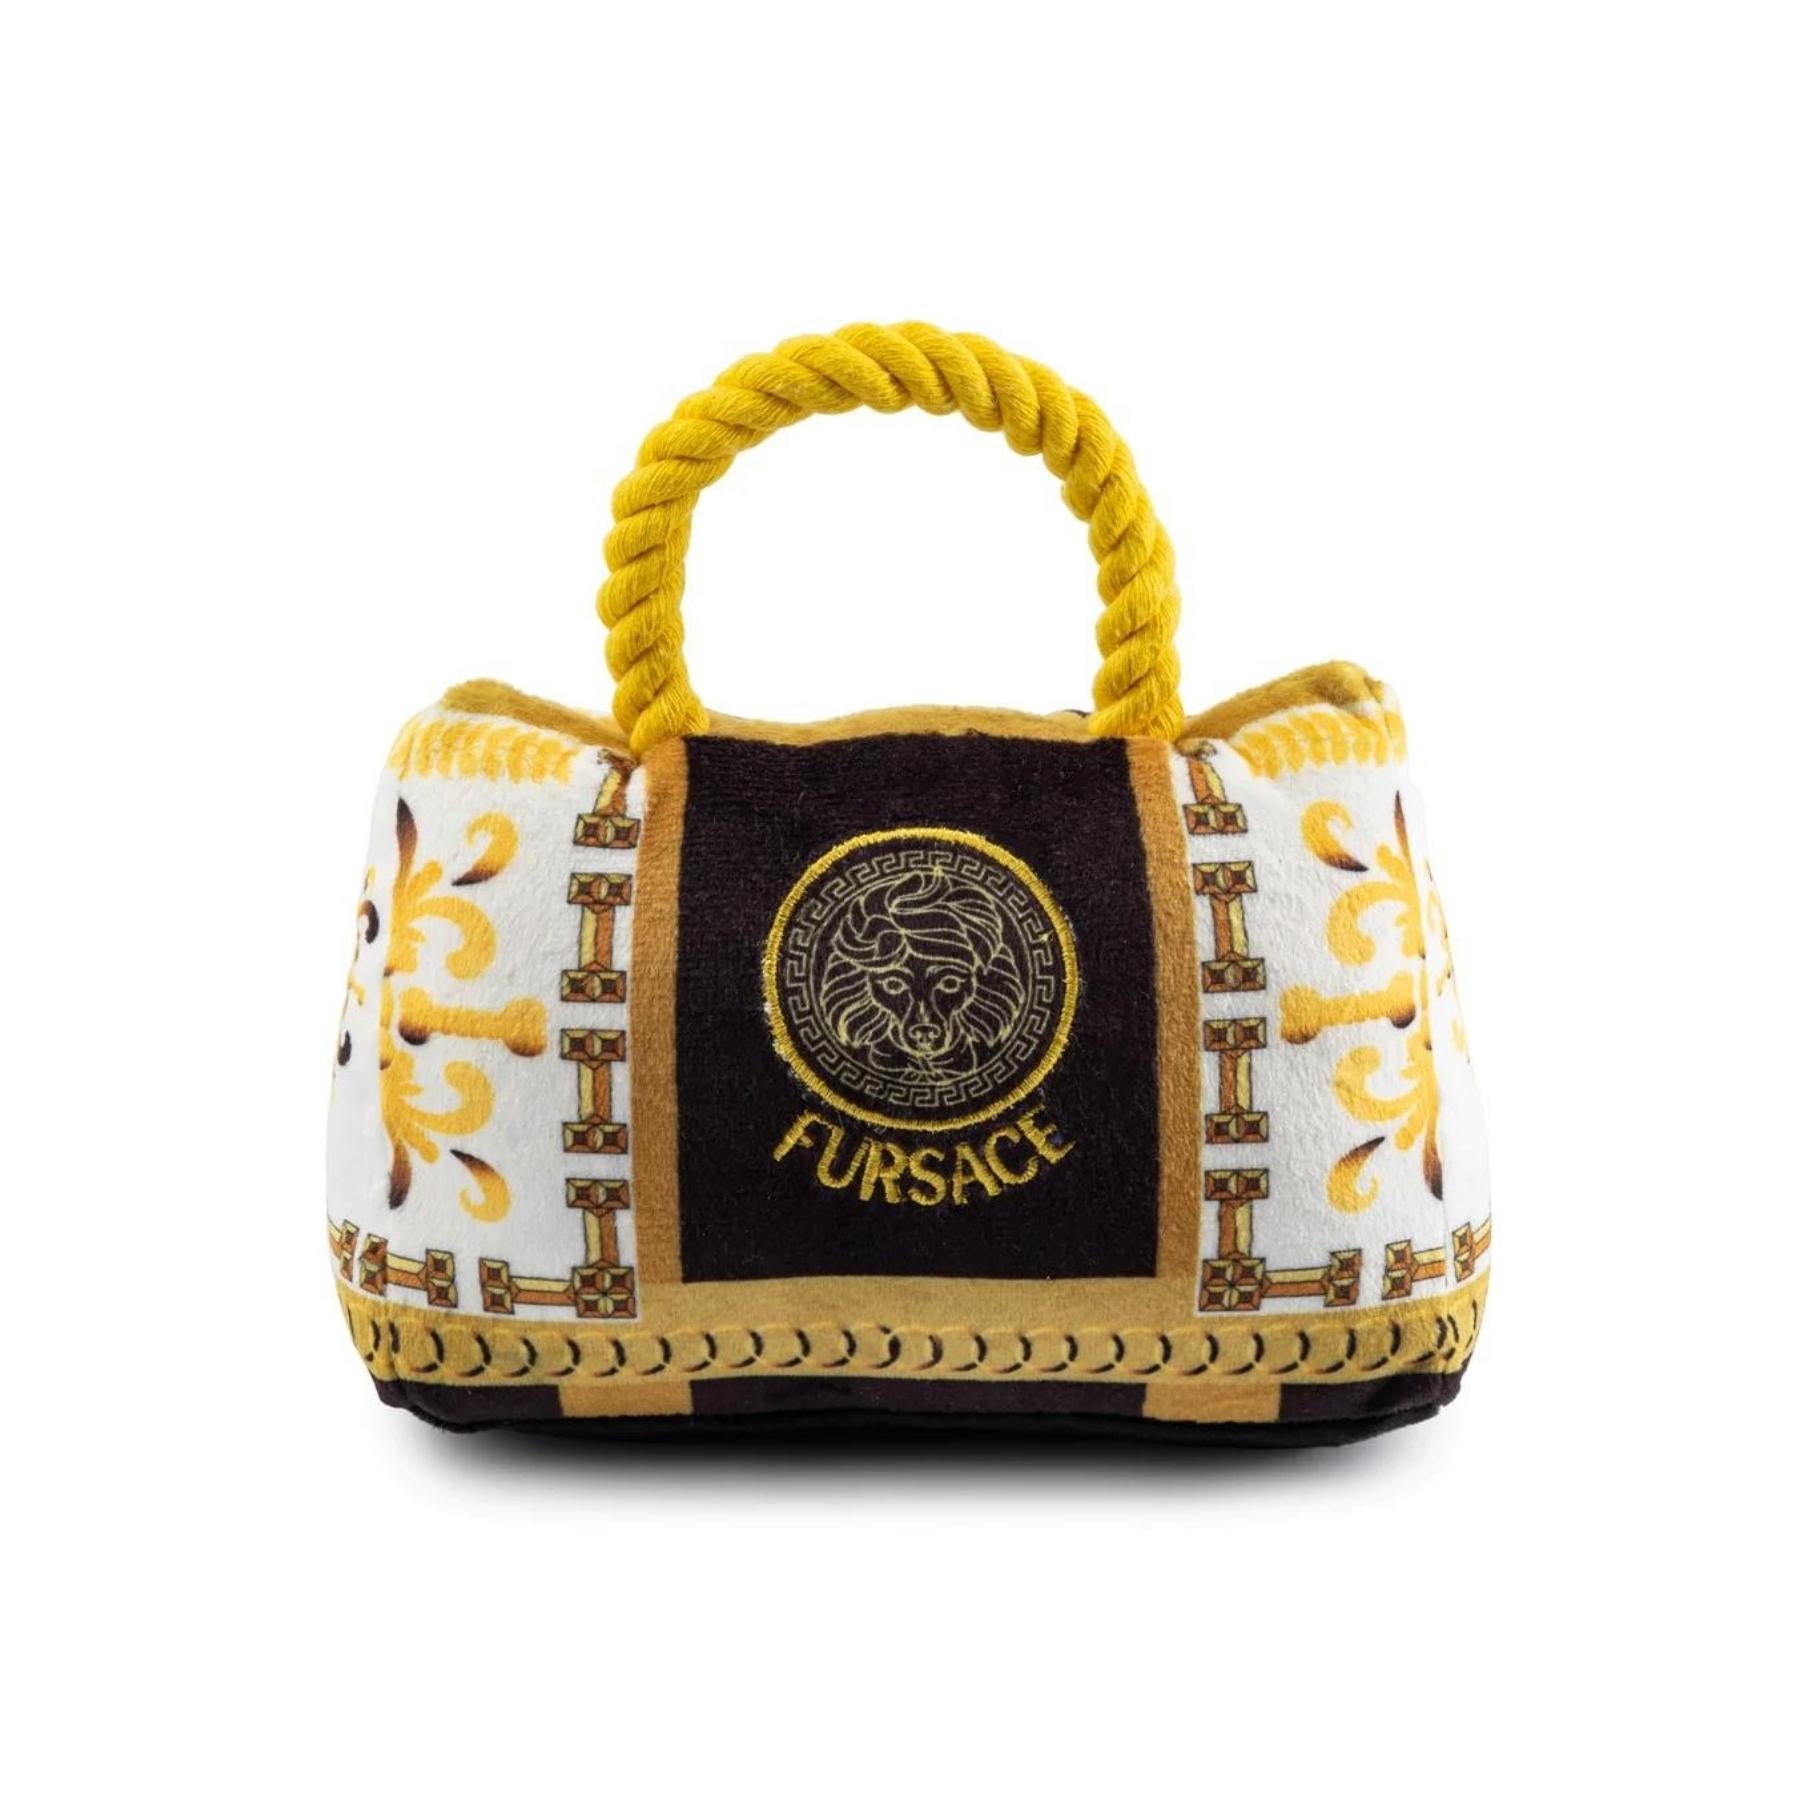 Fursace Handbag - Pooch Luxury